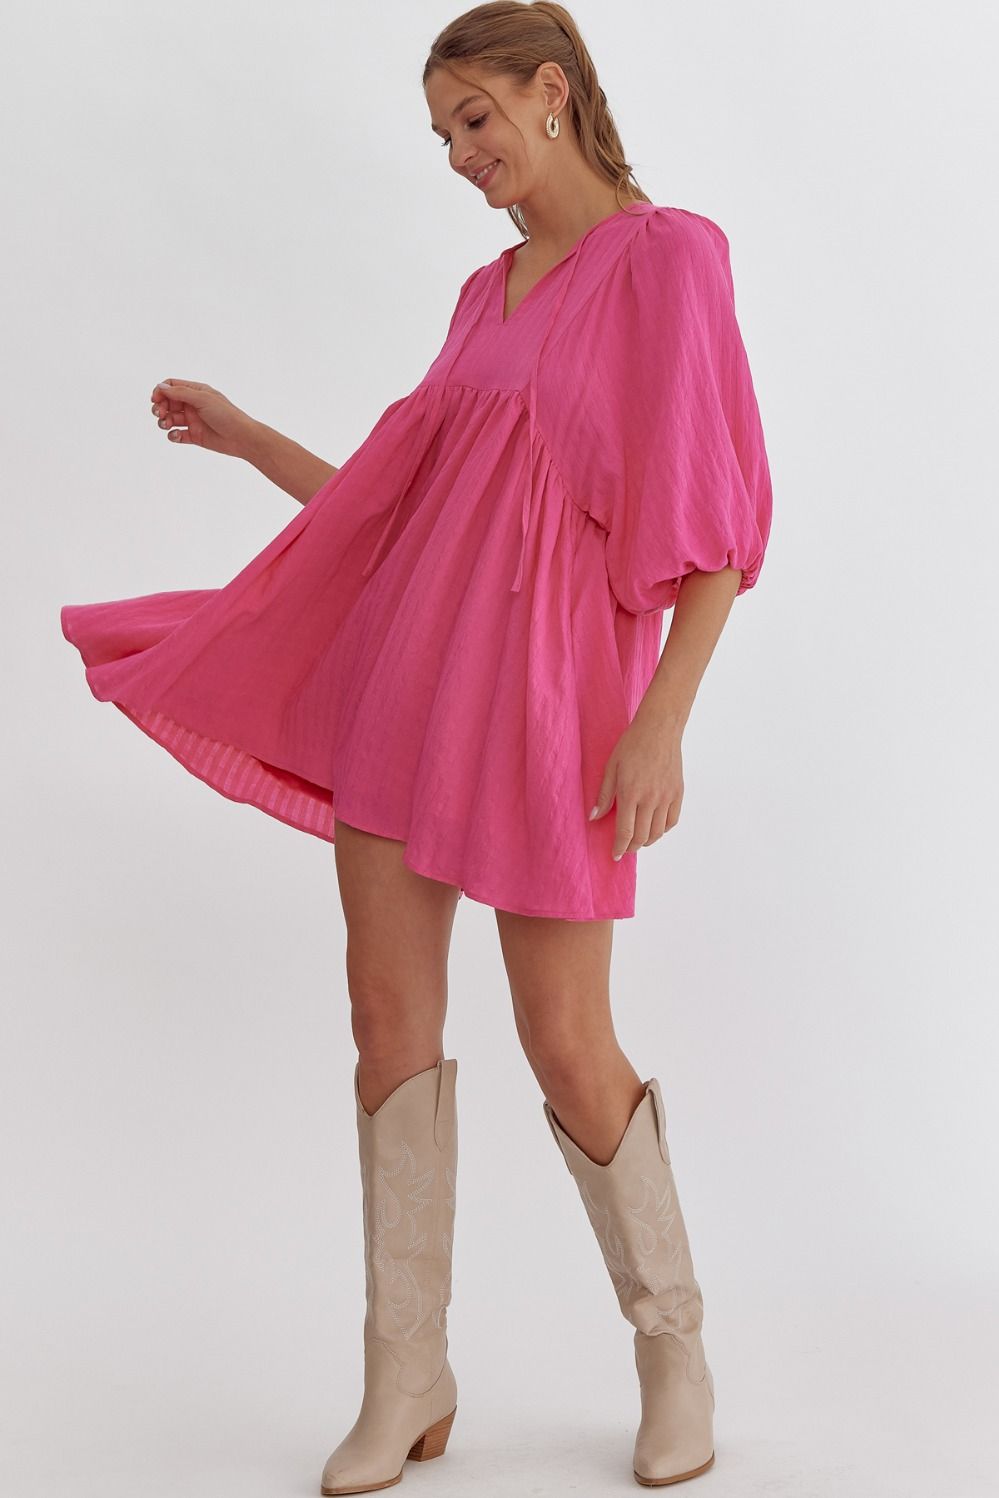 Textured Half Sleeve Mini Dress- Hot Pink